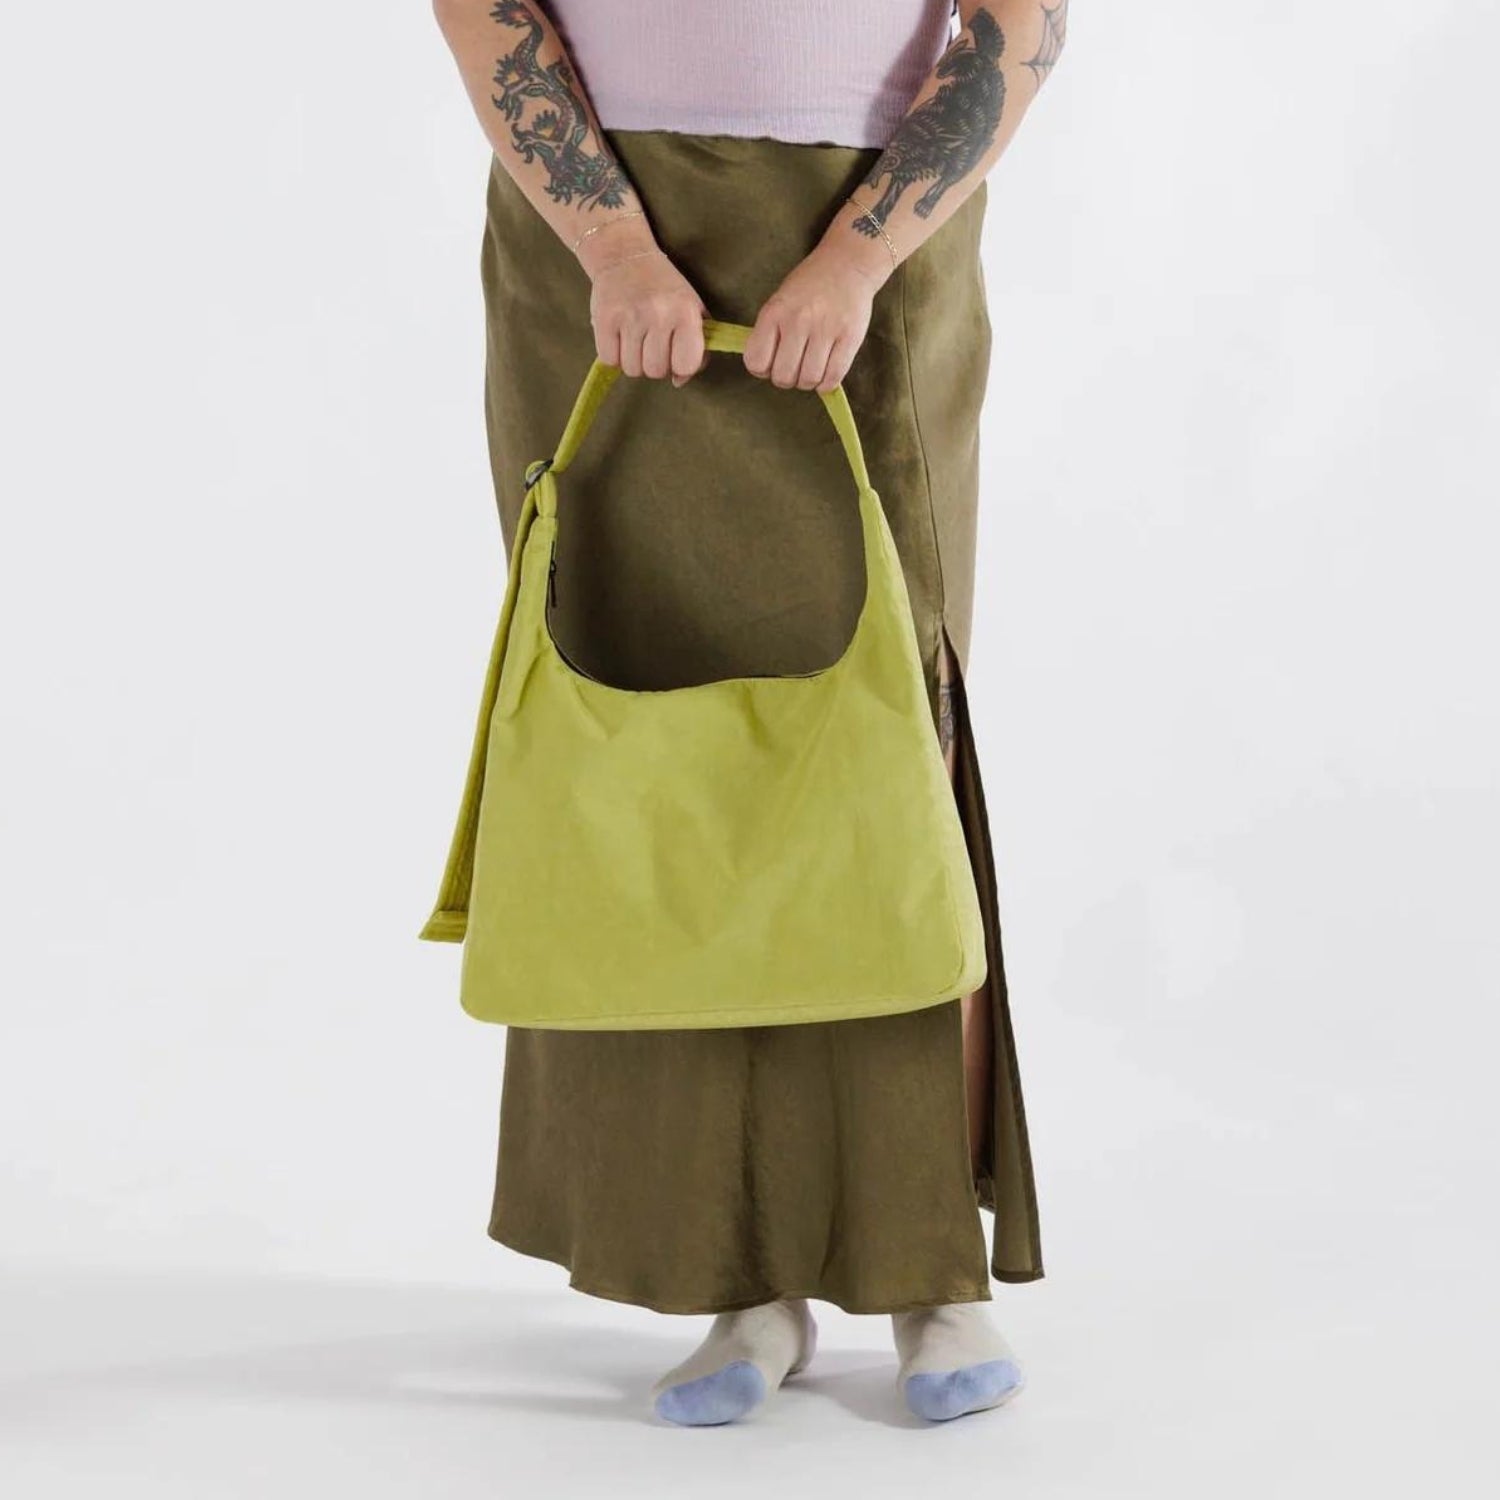 Baggu Nylon Shoulder Bag in Lemongrass